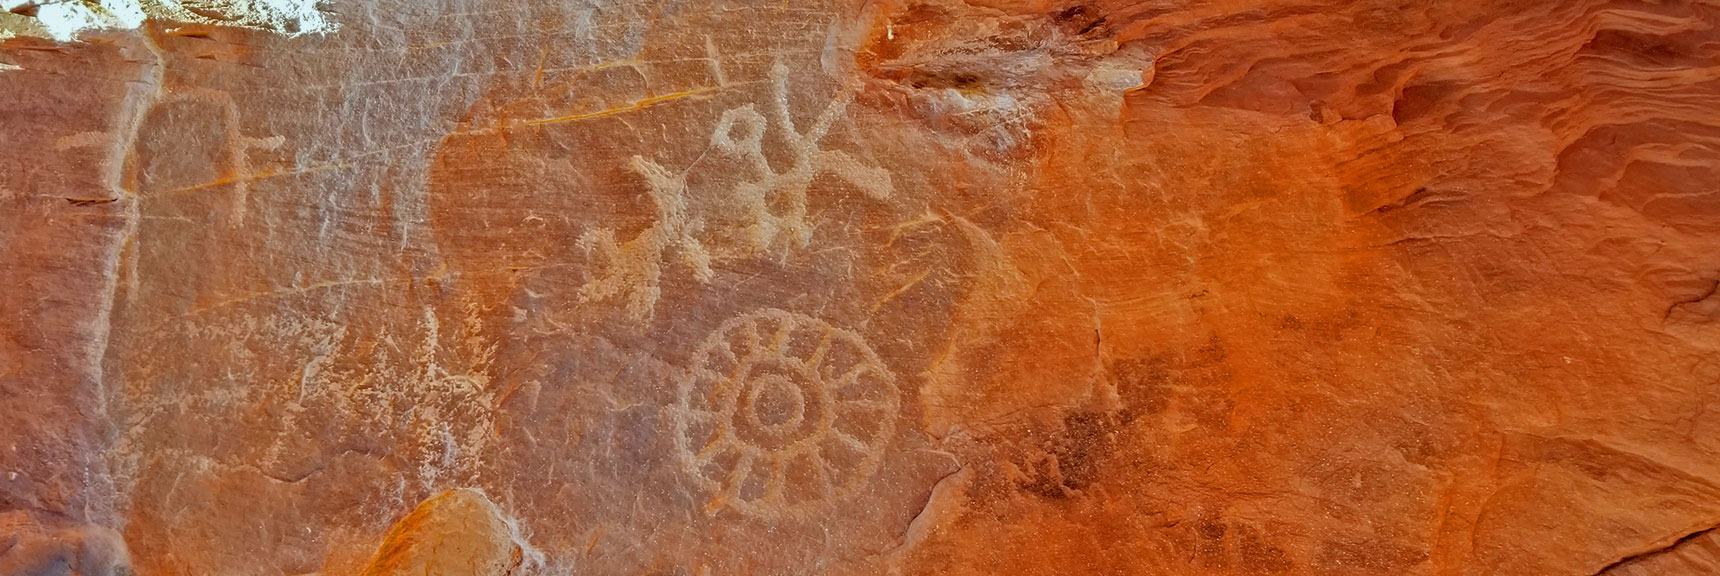 Atlatl Rock Petroglyphs in Valley of Fire State Park, Nevada Slide 3